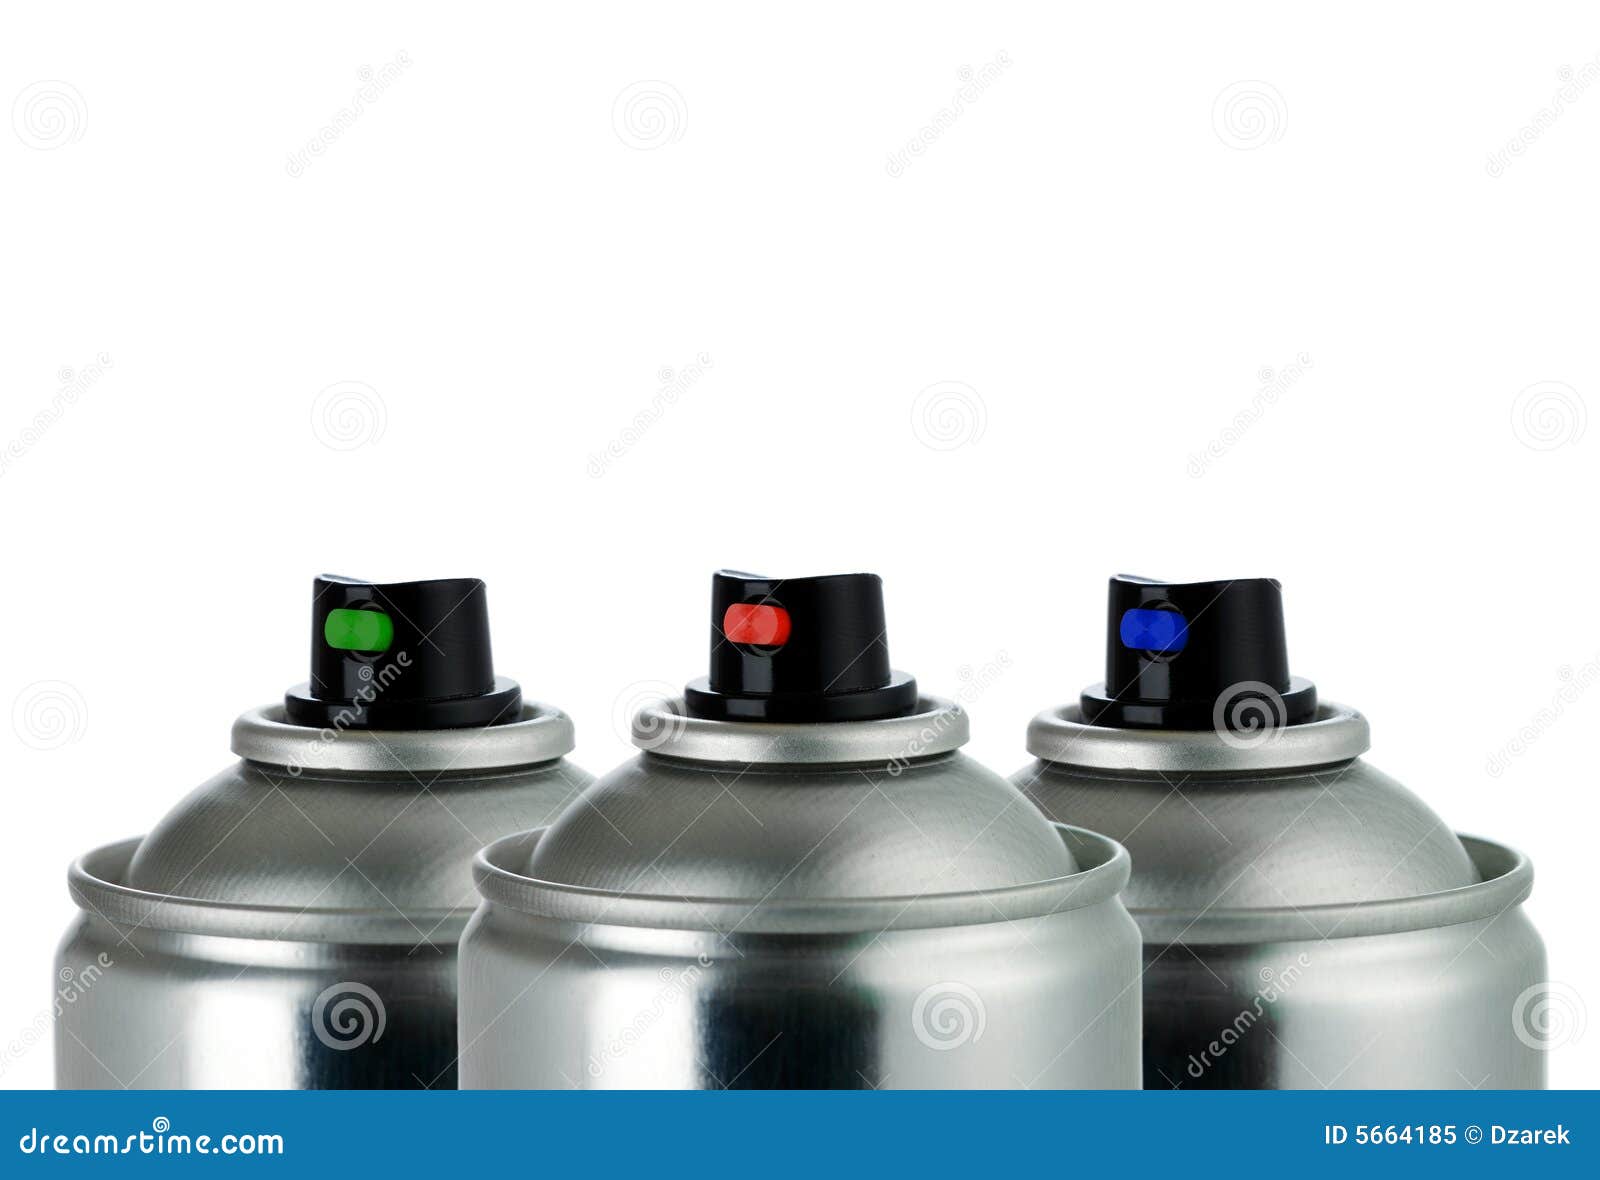 detail of three aerosol cans